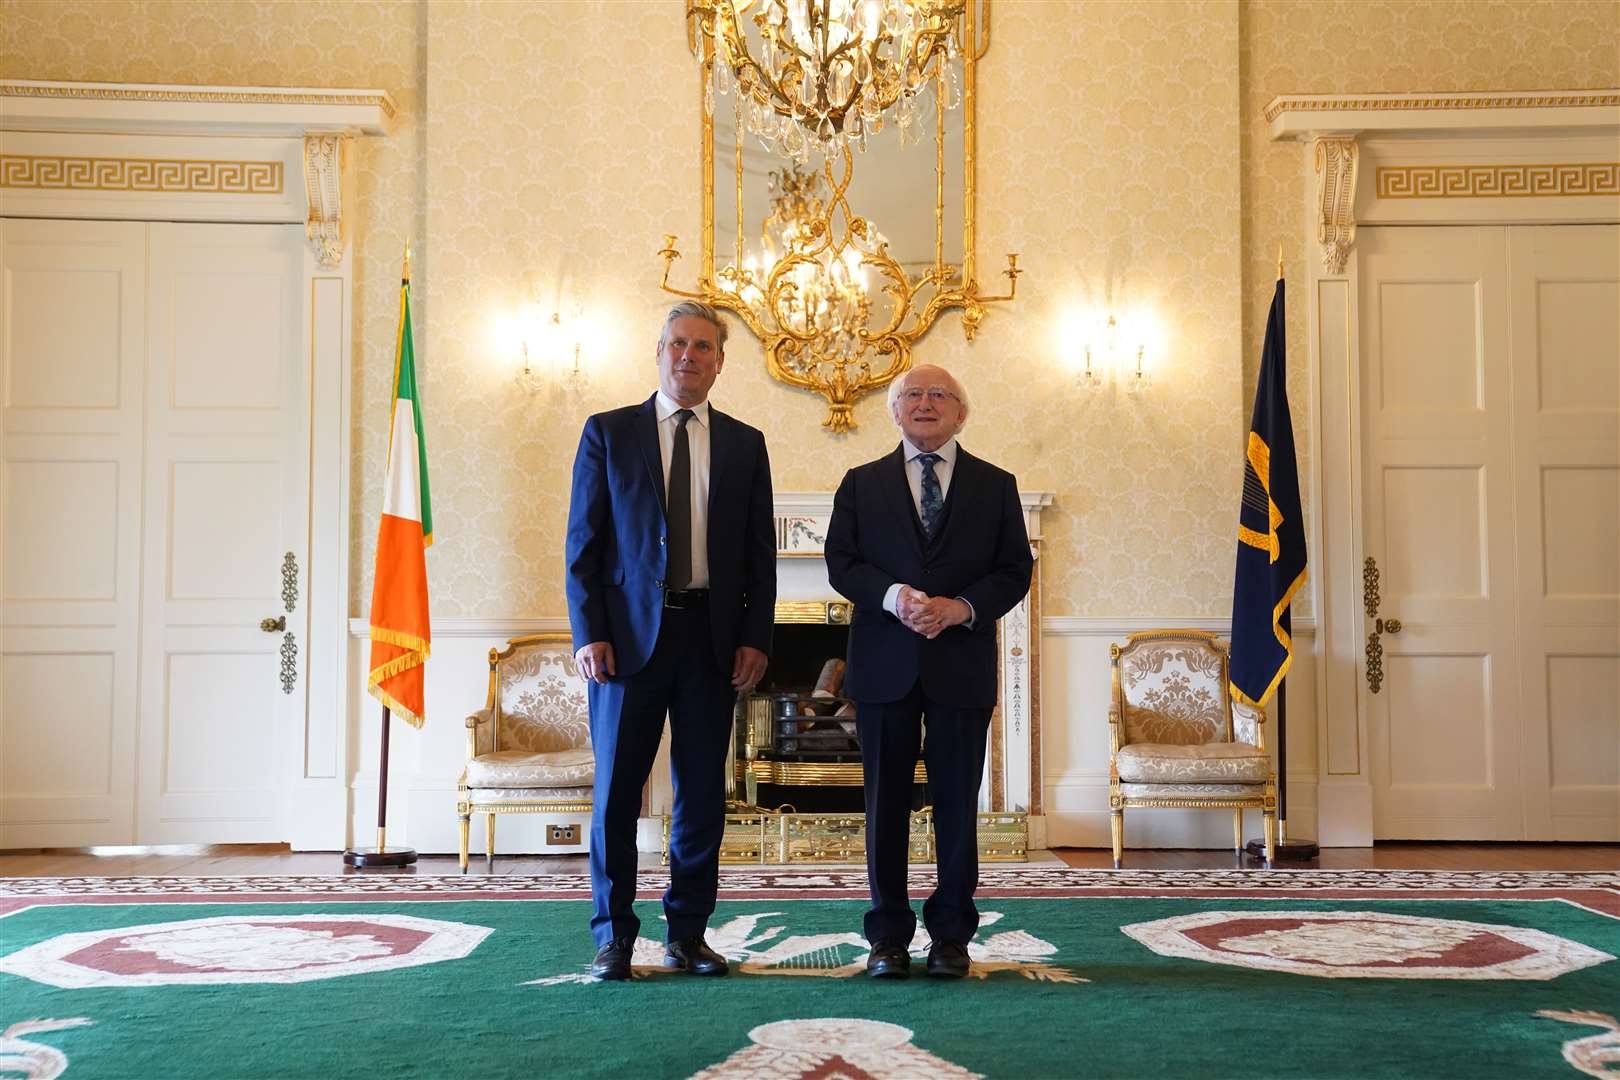 Labour leader Sir Keir Starmer meets President Michael D Higgins in Aras An Uachtarain during his visit to Dublin (Stefan Rousseau/PA)